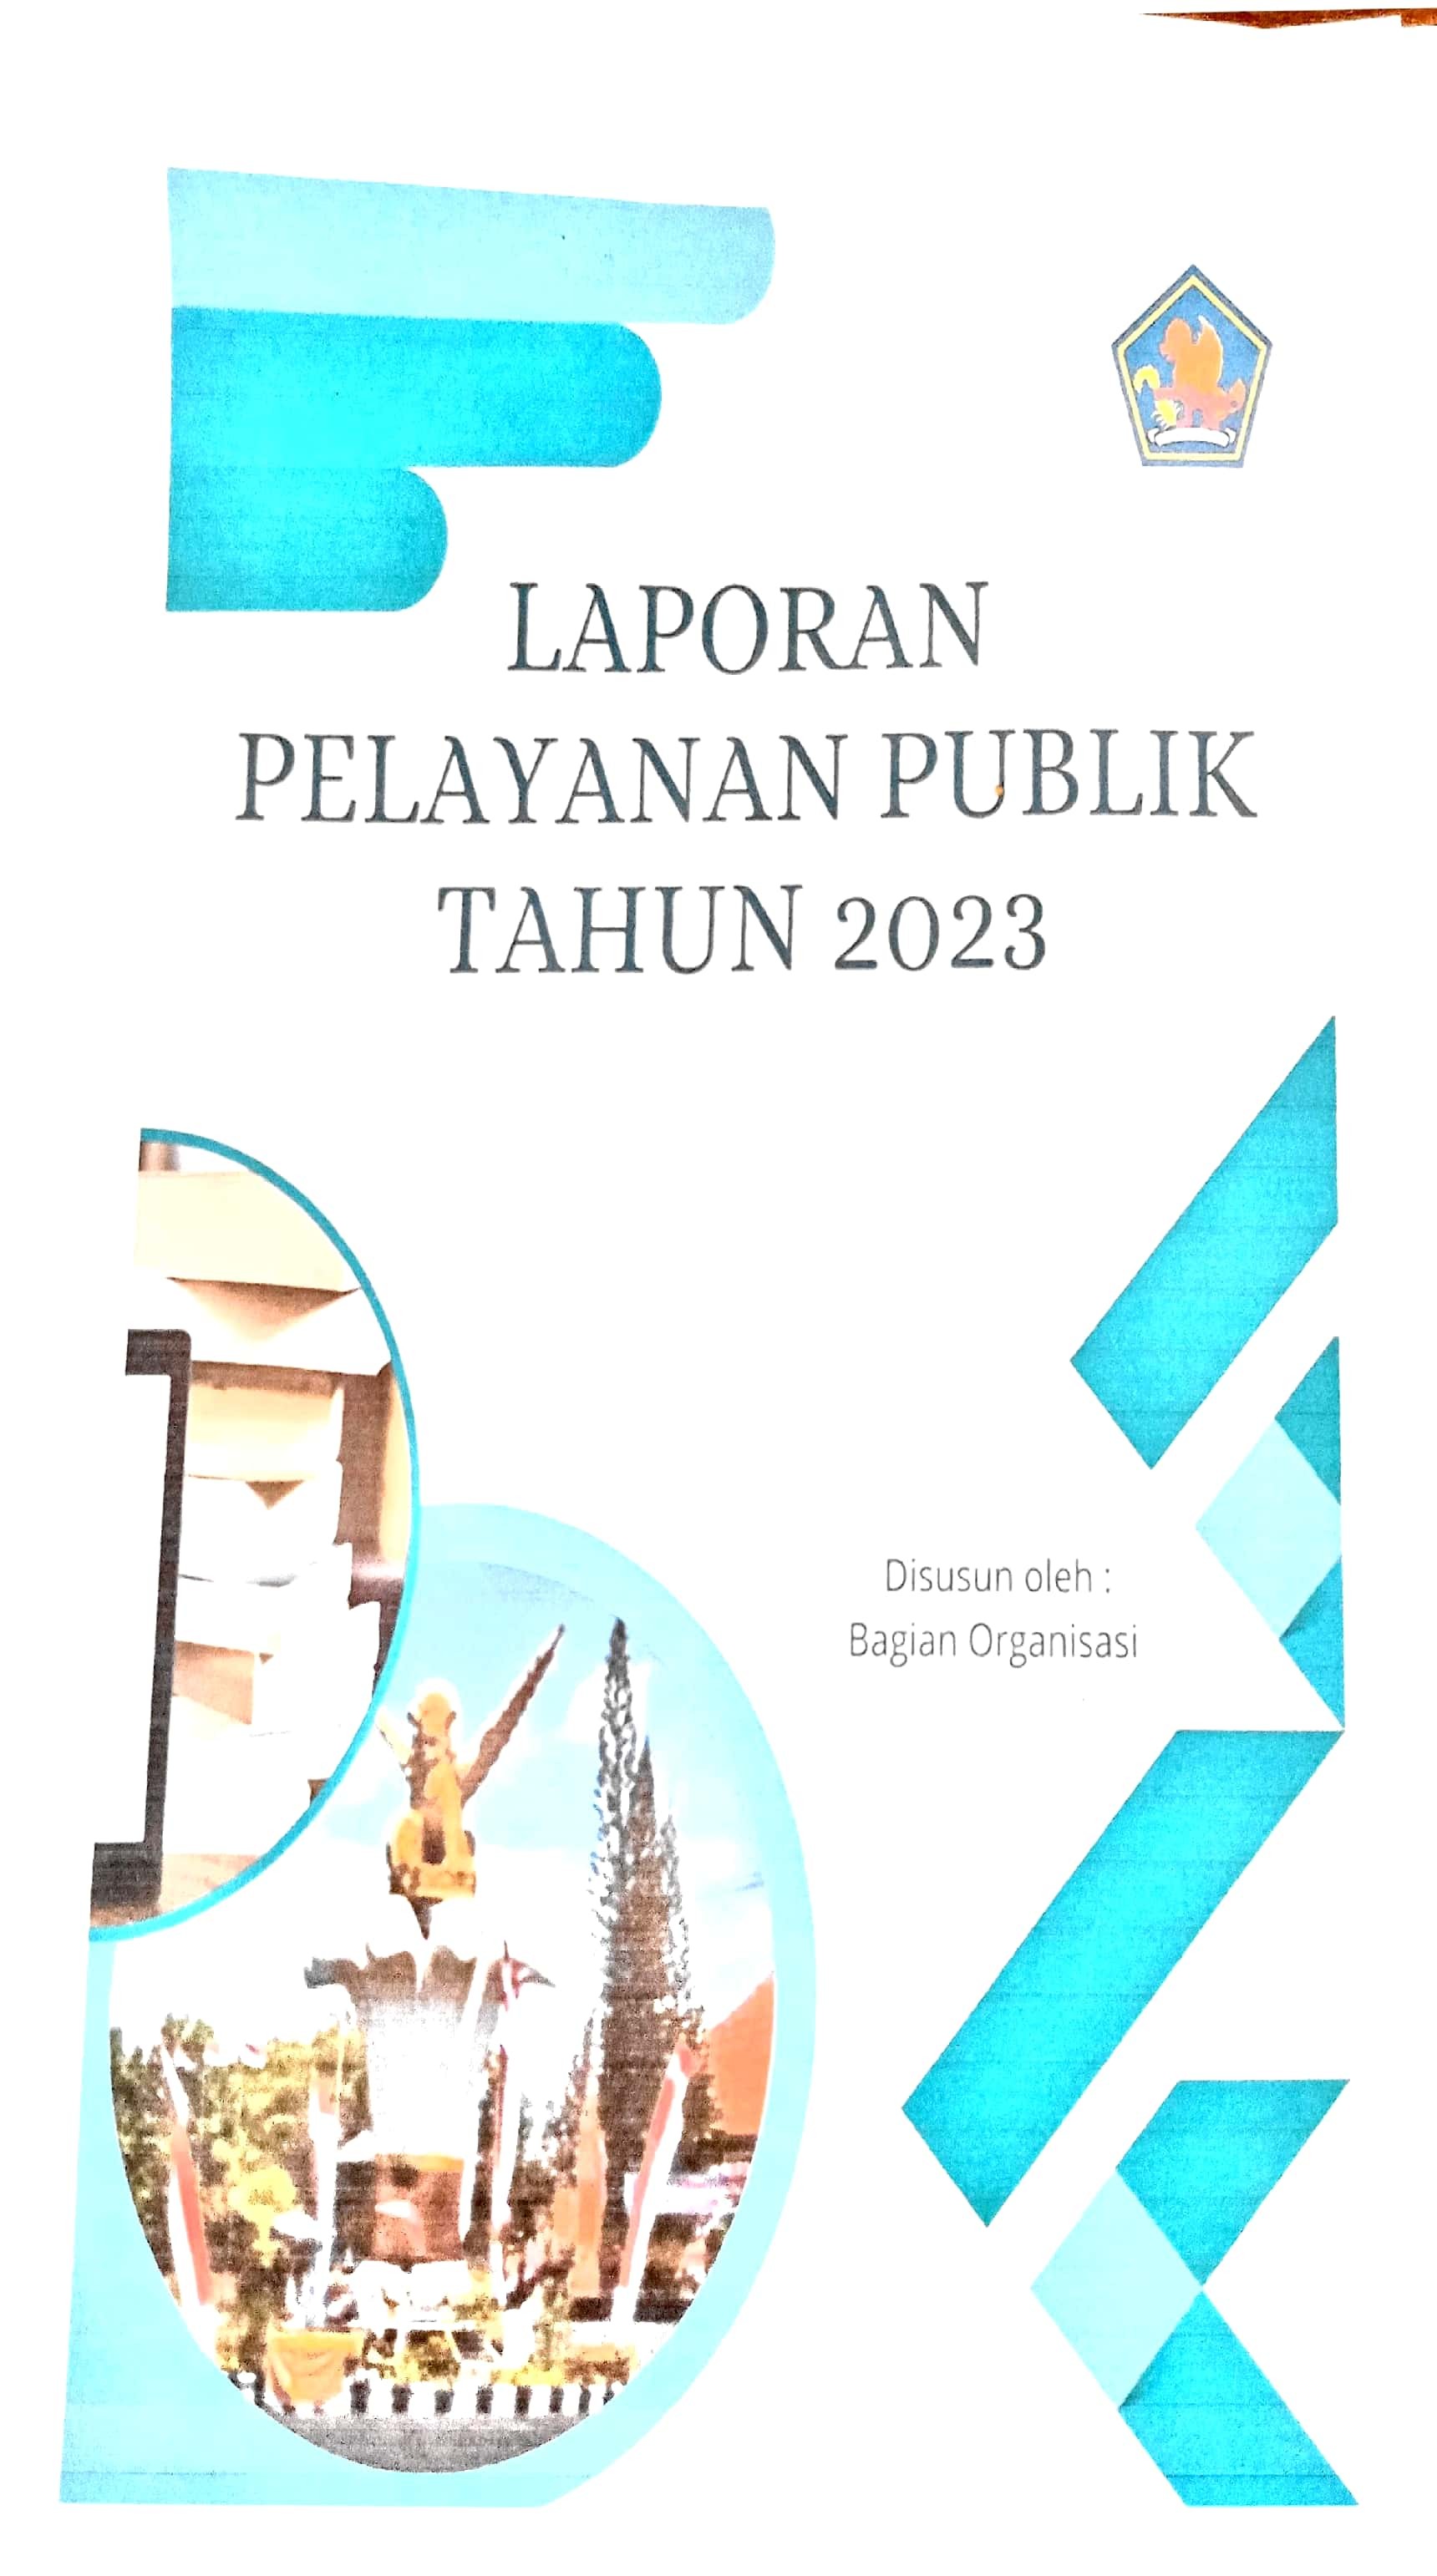 LAPORAN PELAYANAN PUBLIK TH 2023